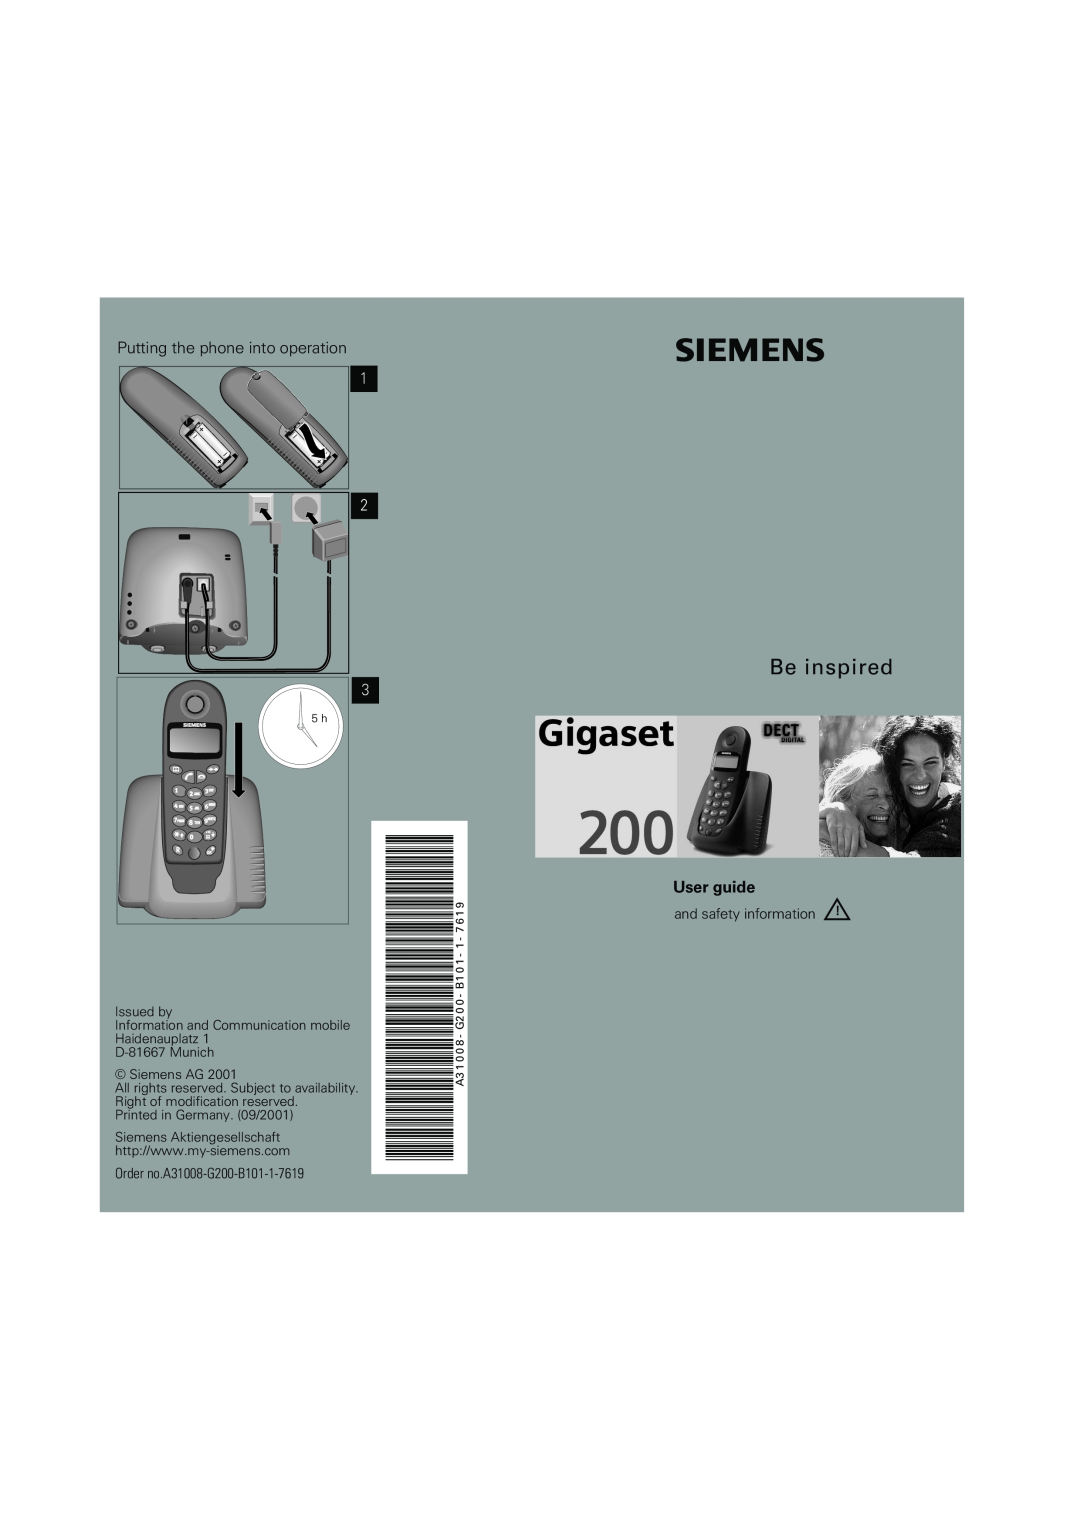 Siemens manual User guide, and safety information, Order no.A31008-G200-B101-1-7619, Siemens Aktiengesellschaft 